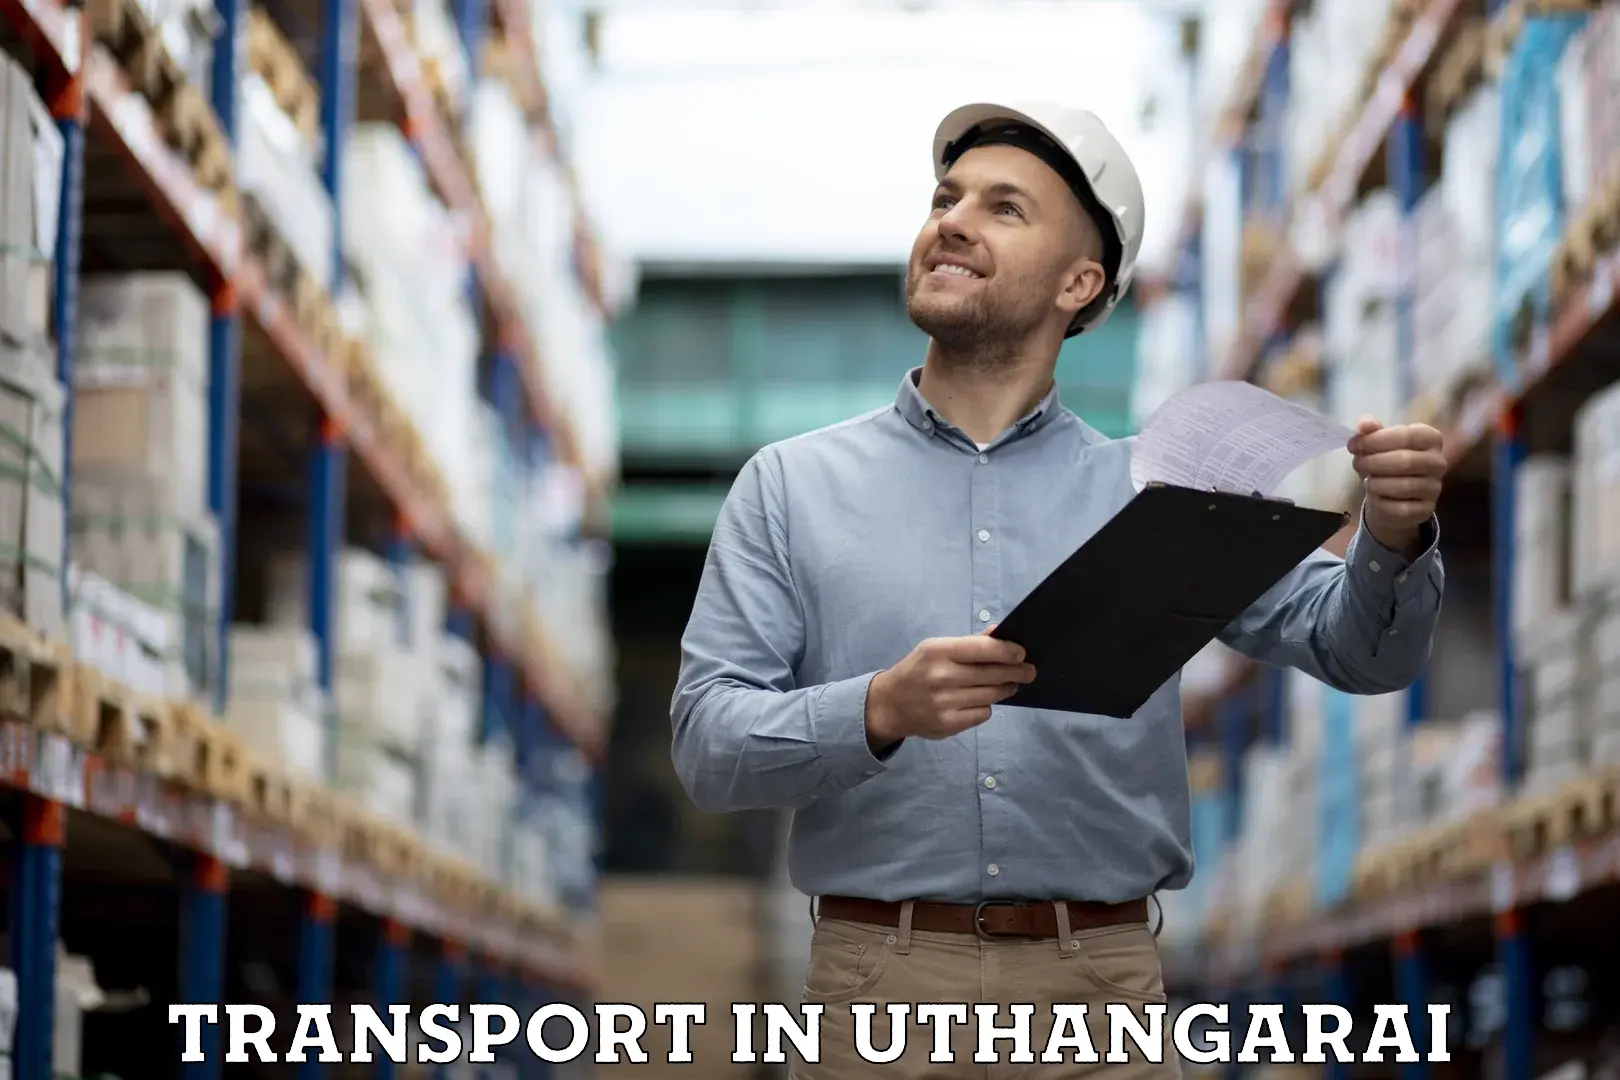 Furniture transport service in Uthangarai